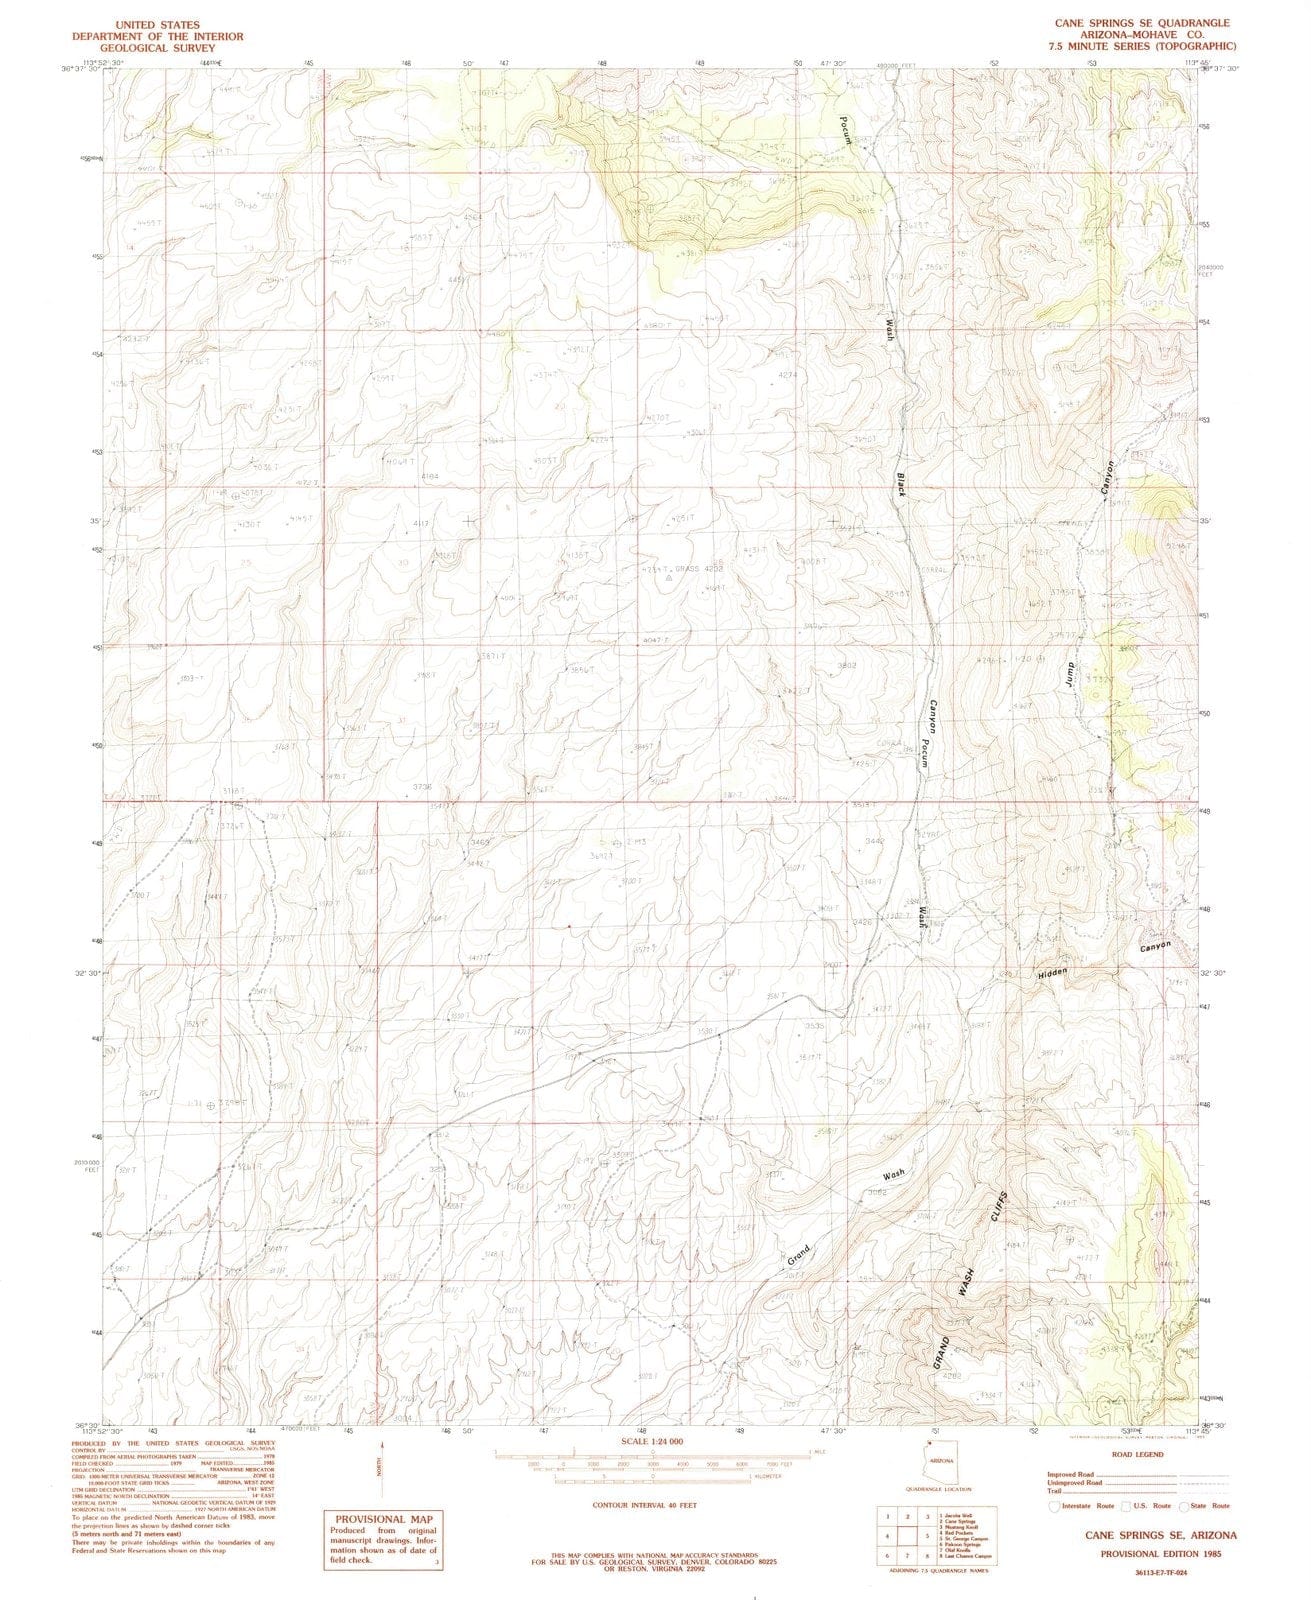 1985 Cane Springs, AZ - Arizona - USGS Topographic Map